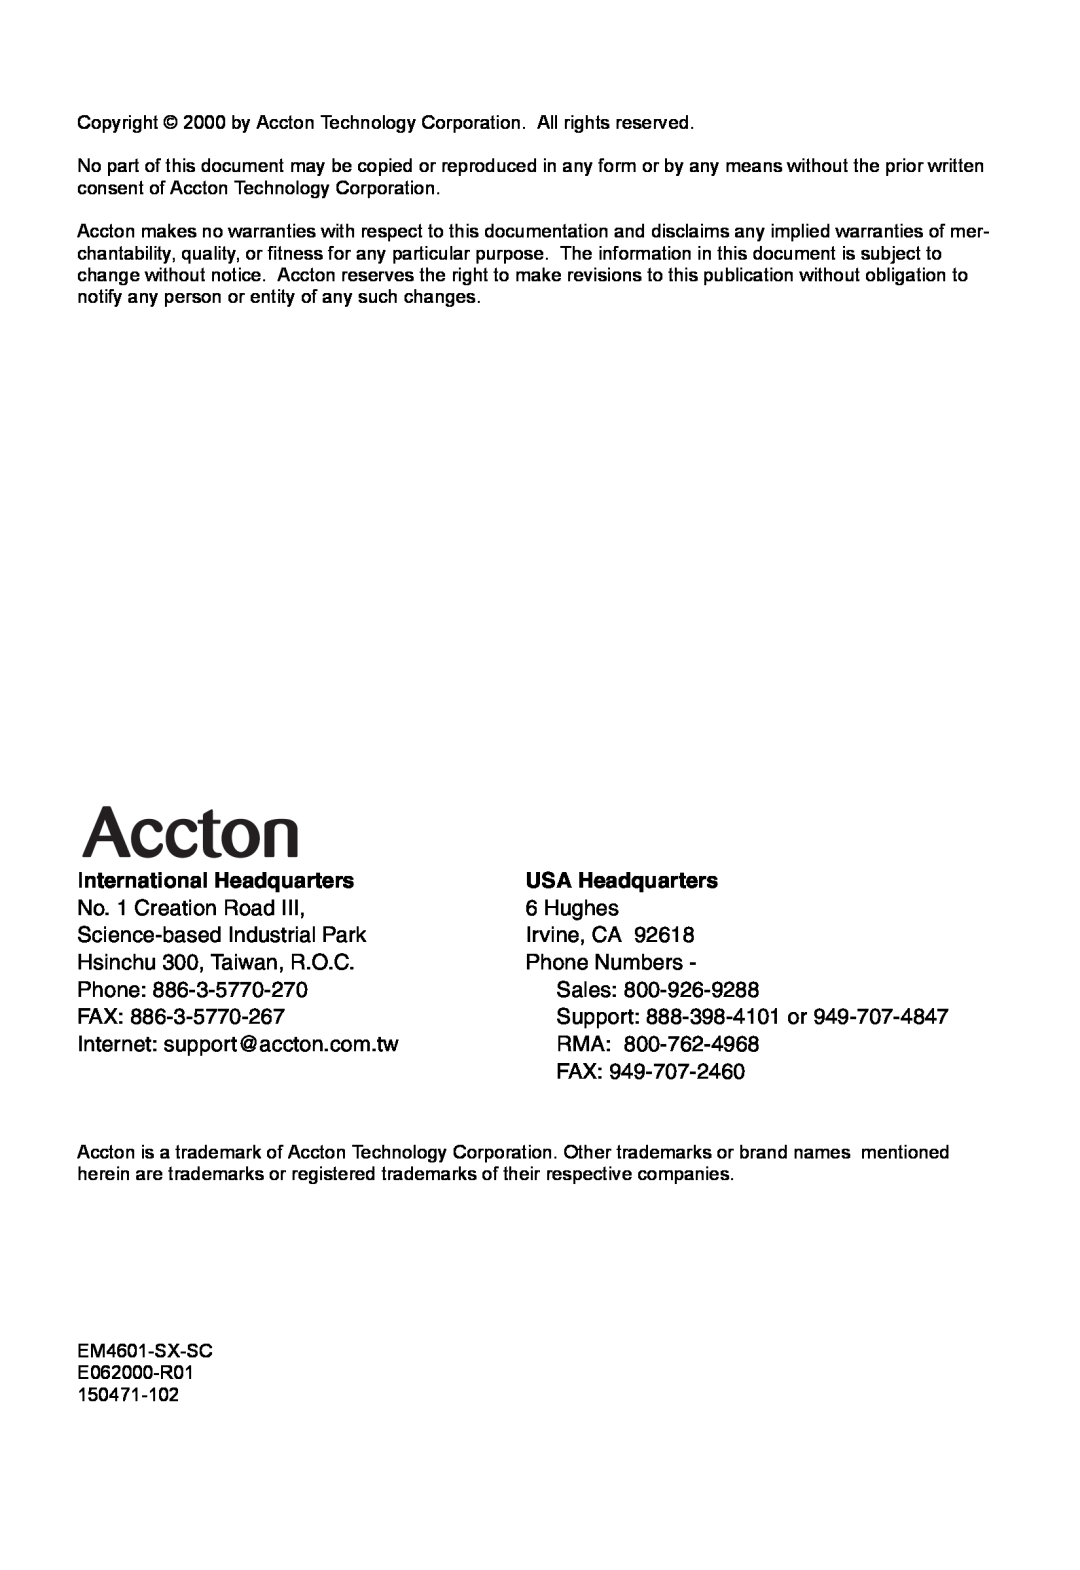 Accton Technology E062000-R01, EM4601-SX-SC manual International Headquarters, USA Headquarters, Support 888-398-4101 or 